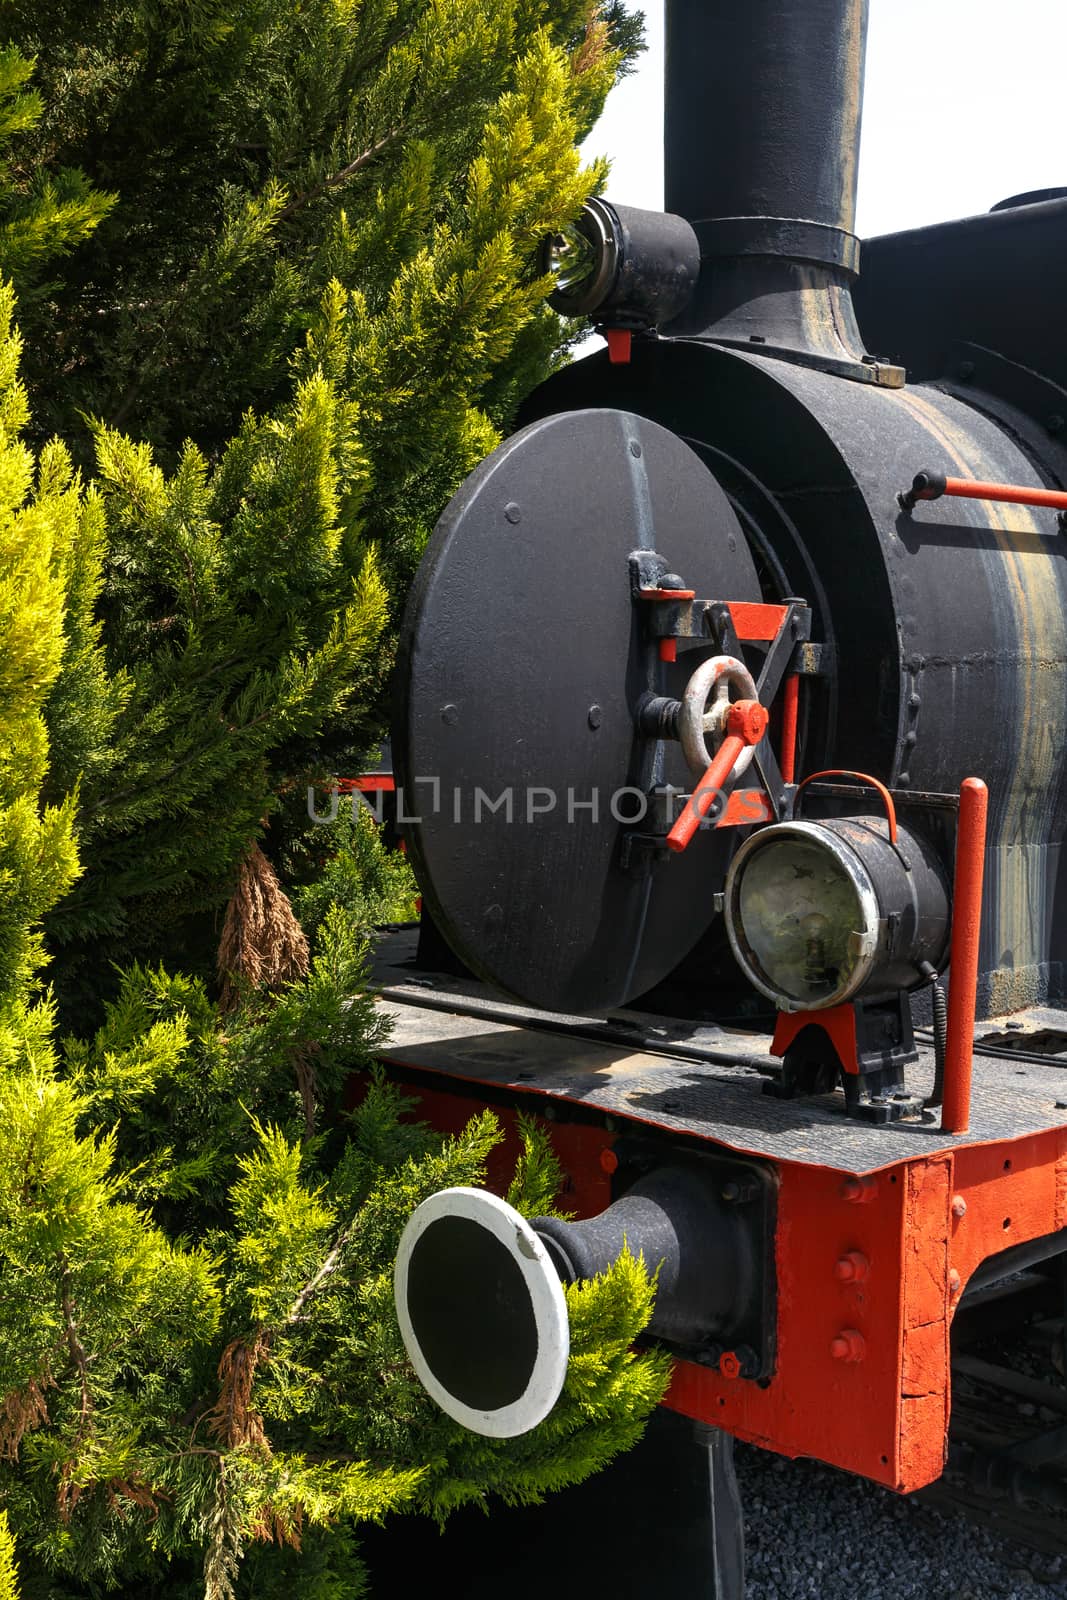 Historical Train Locomotive by niglaynike